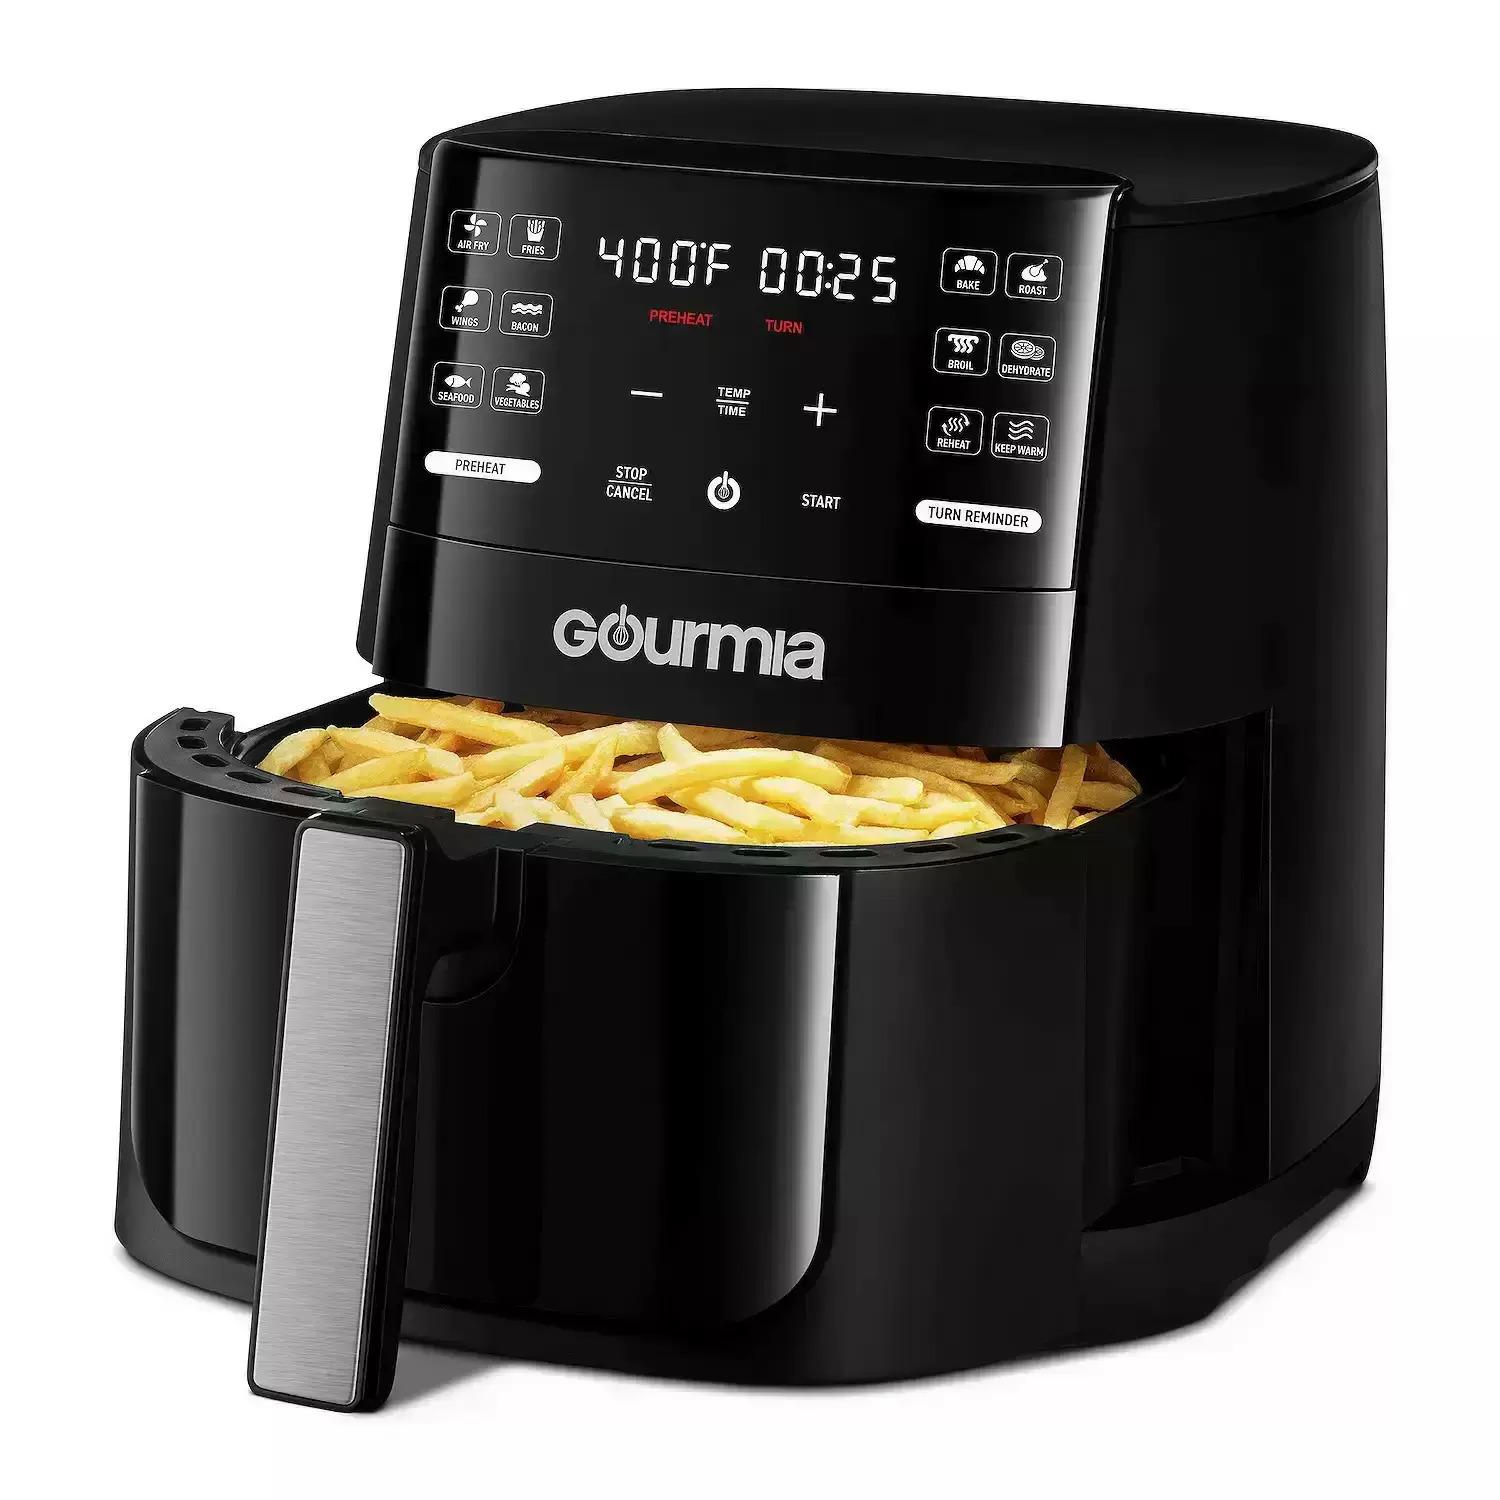 Gourmia Digital Air Fryer 6-Quart GAF612 with $5 Kohls Cash for $34.84